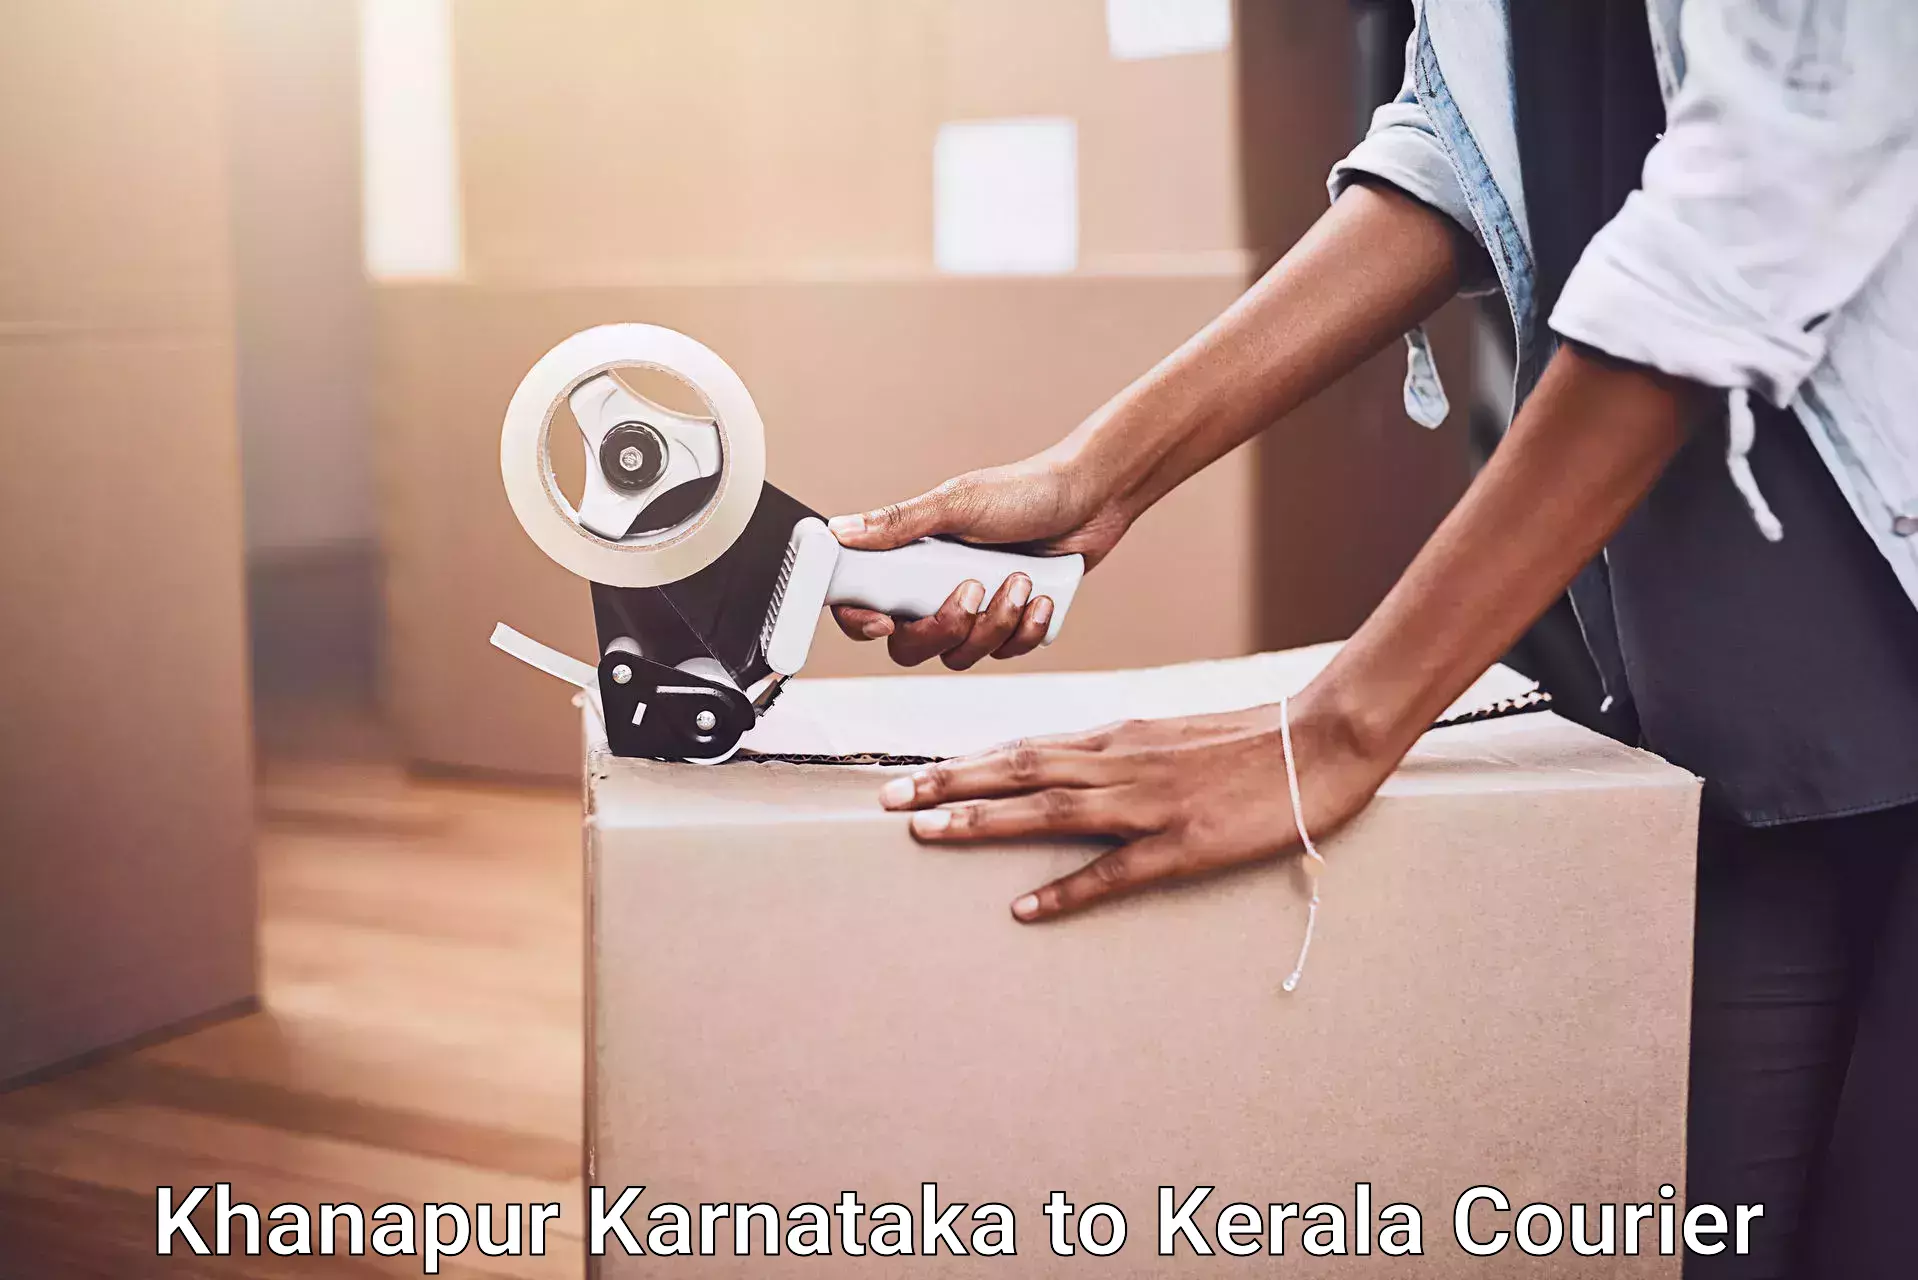 Furniture delivery service Khanapur Karnataka to IIIT Kottayam